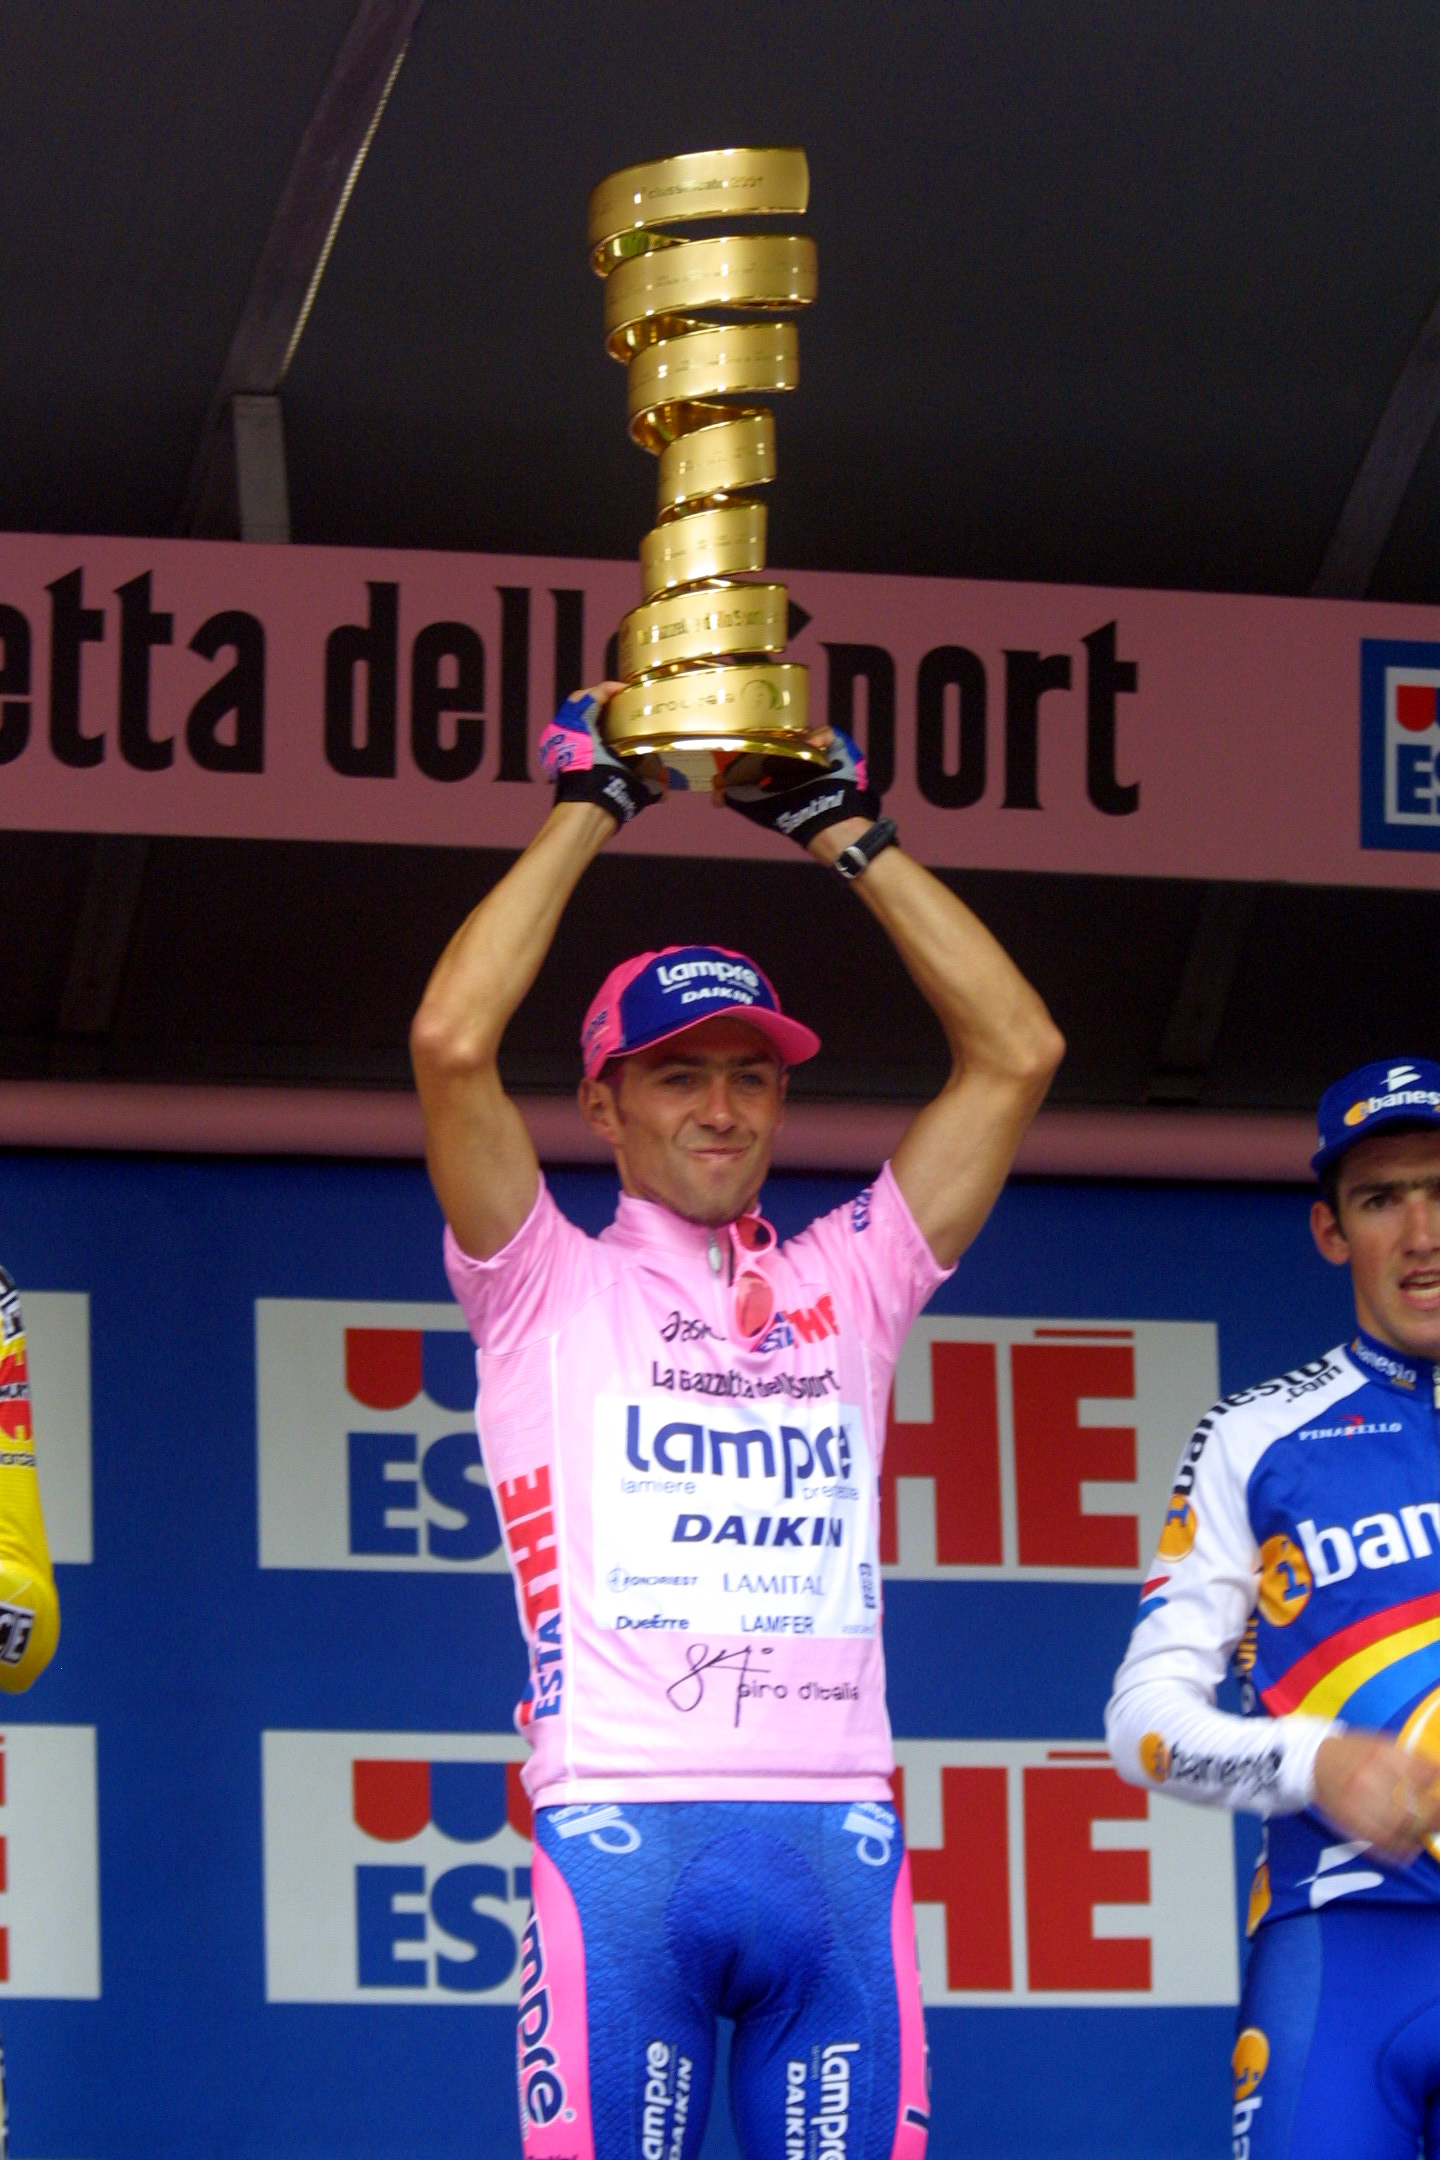 Giro d’Italia 2001 – SIMONI